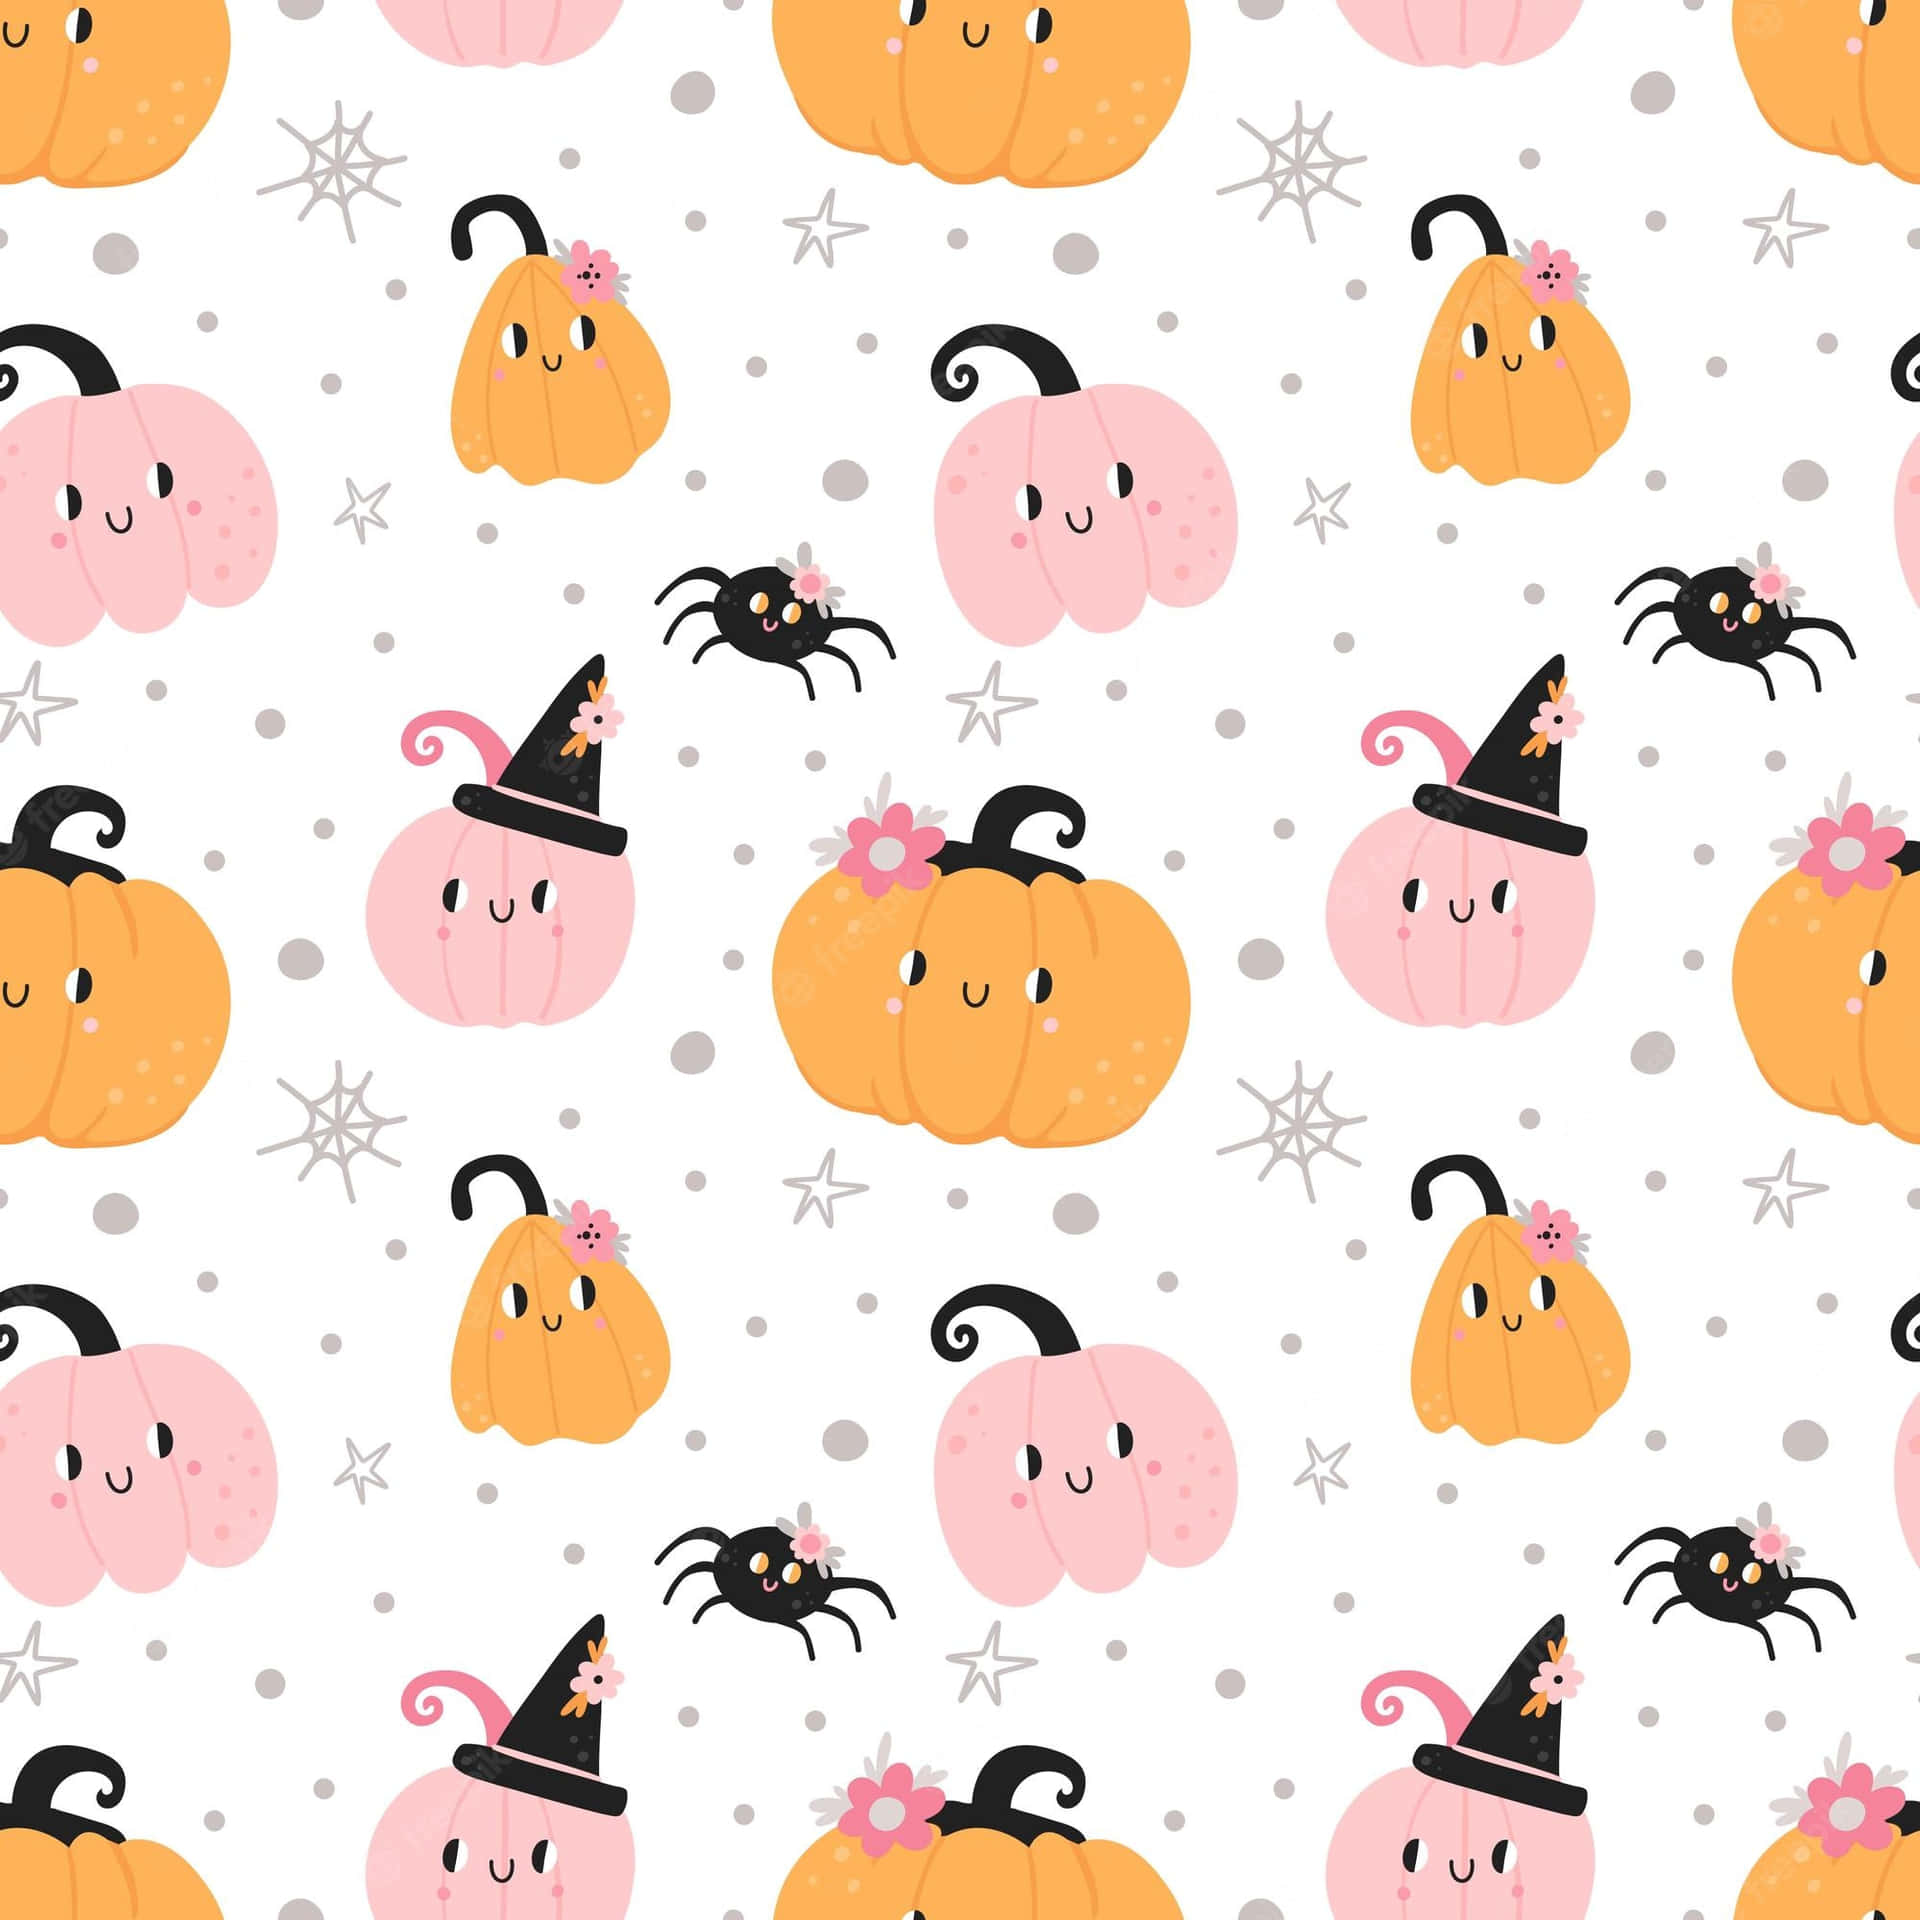 Get spooky in pink this Halloween!